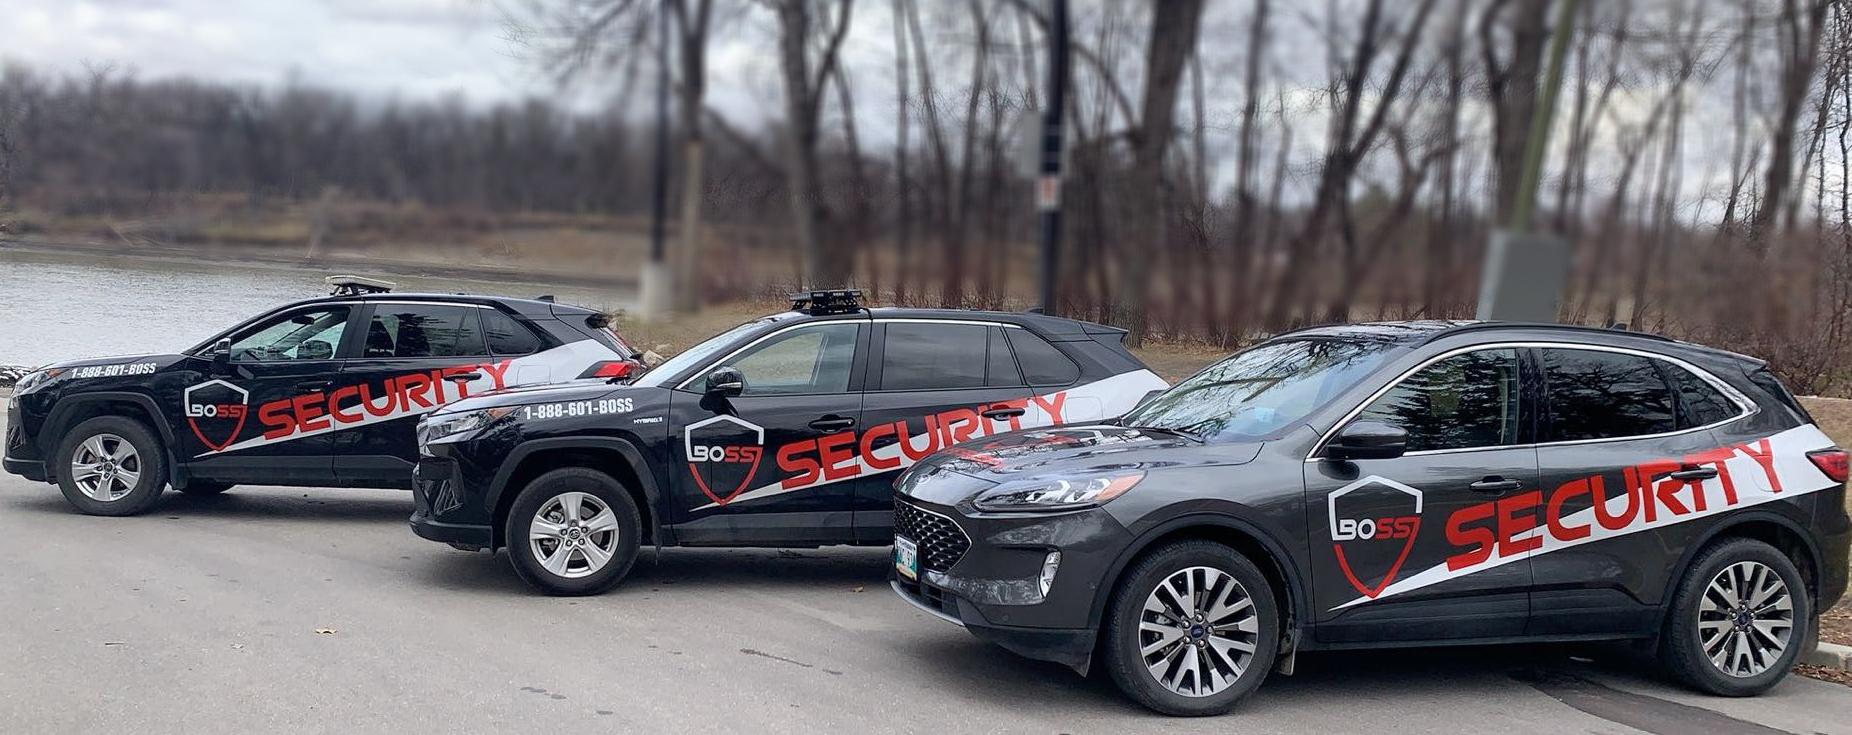 Winnipeg Security Services: Boss Security